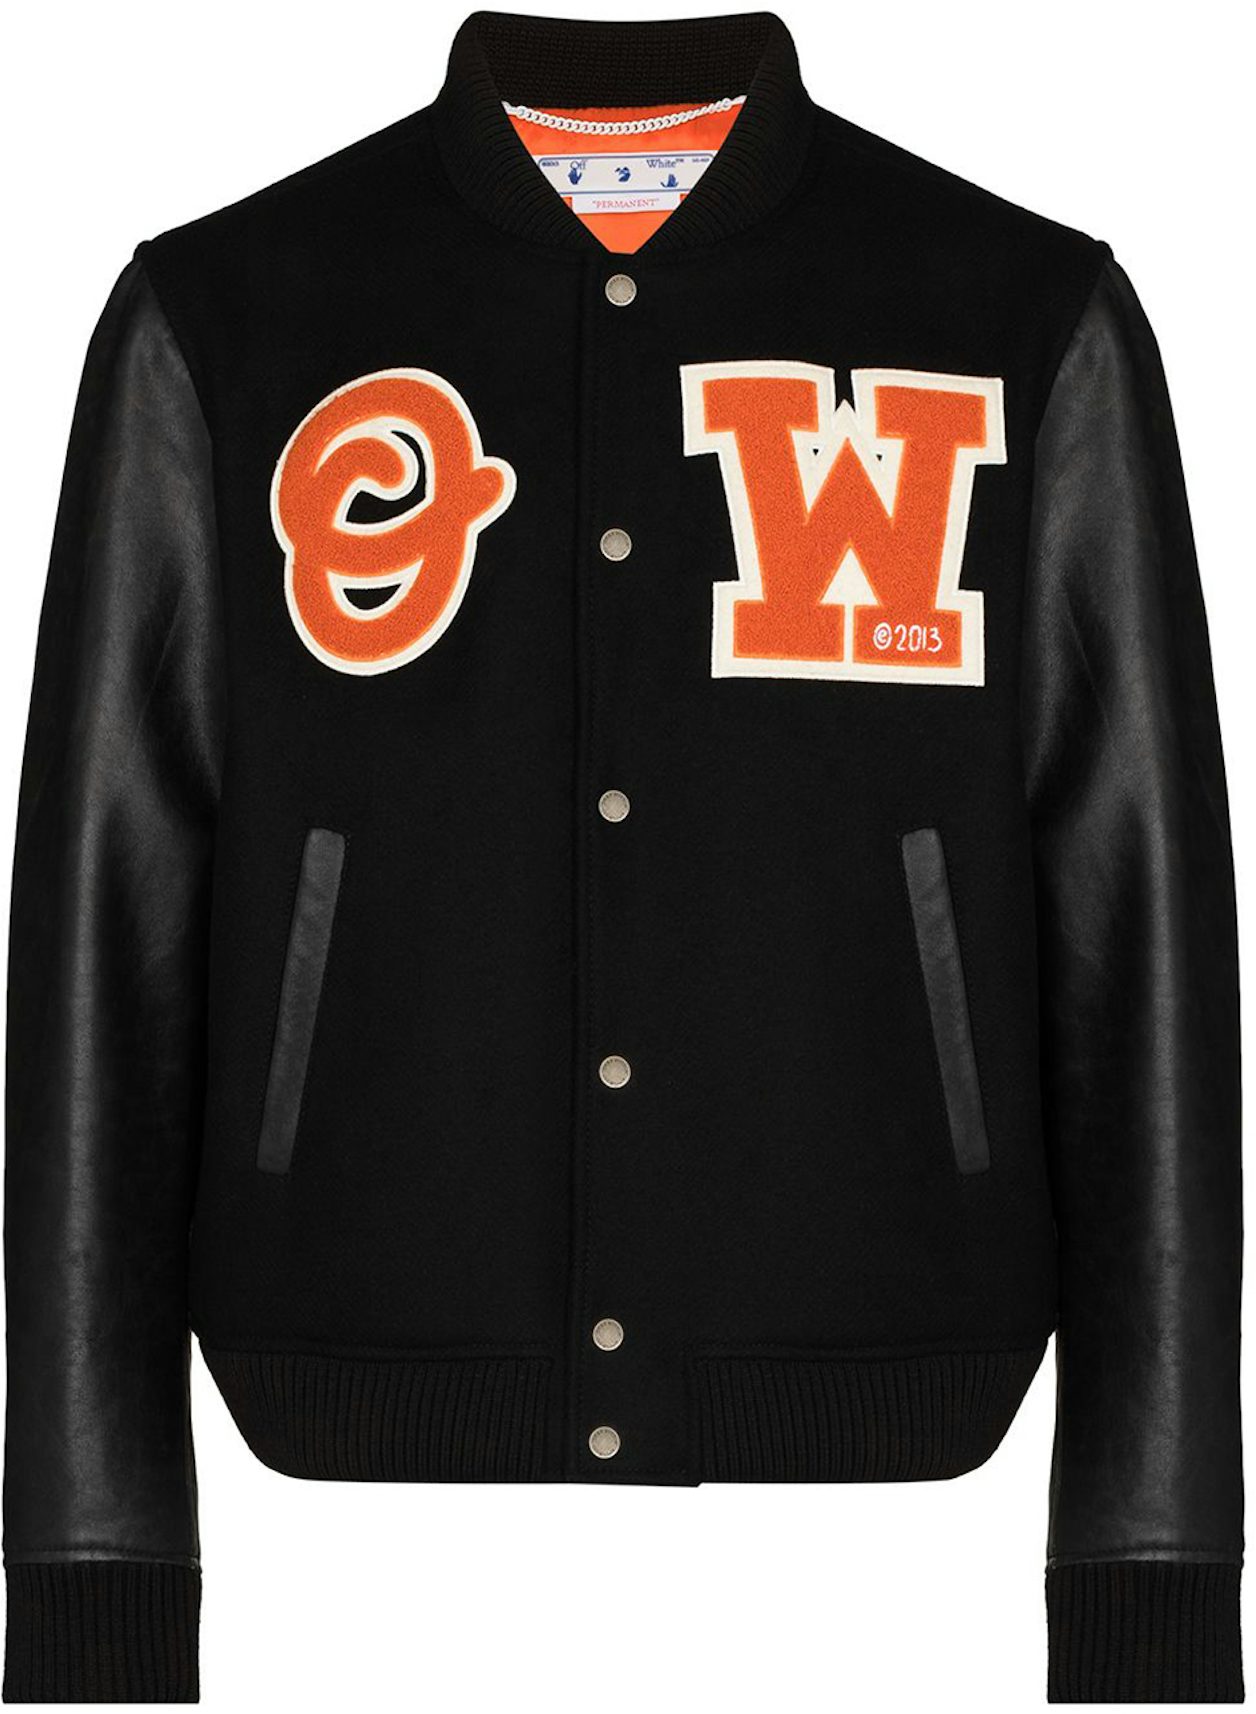 Off-White c/o Virgil Abloh Single Arrow Slim Track Jacket in Orange for Men